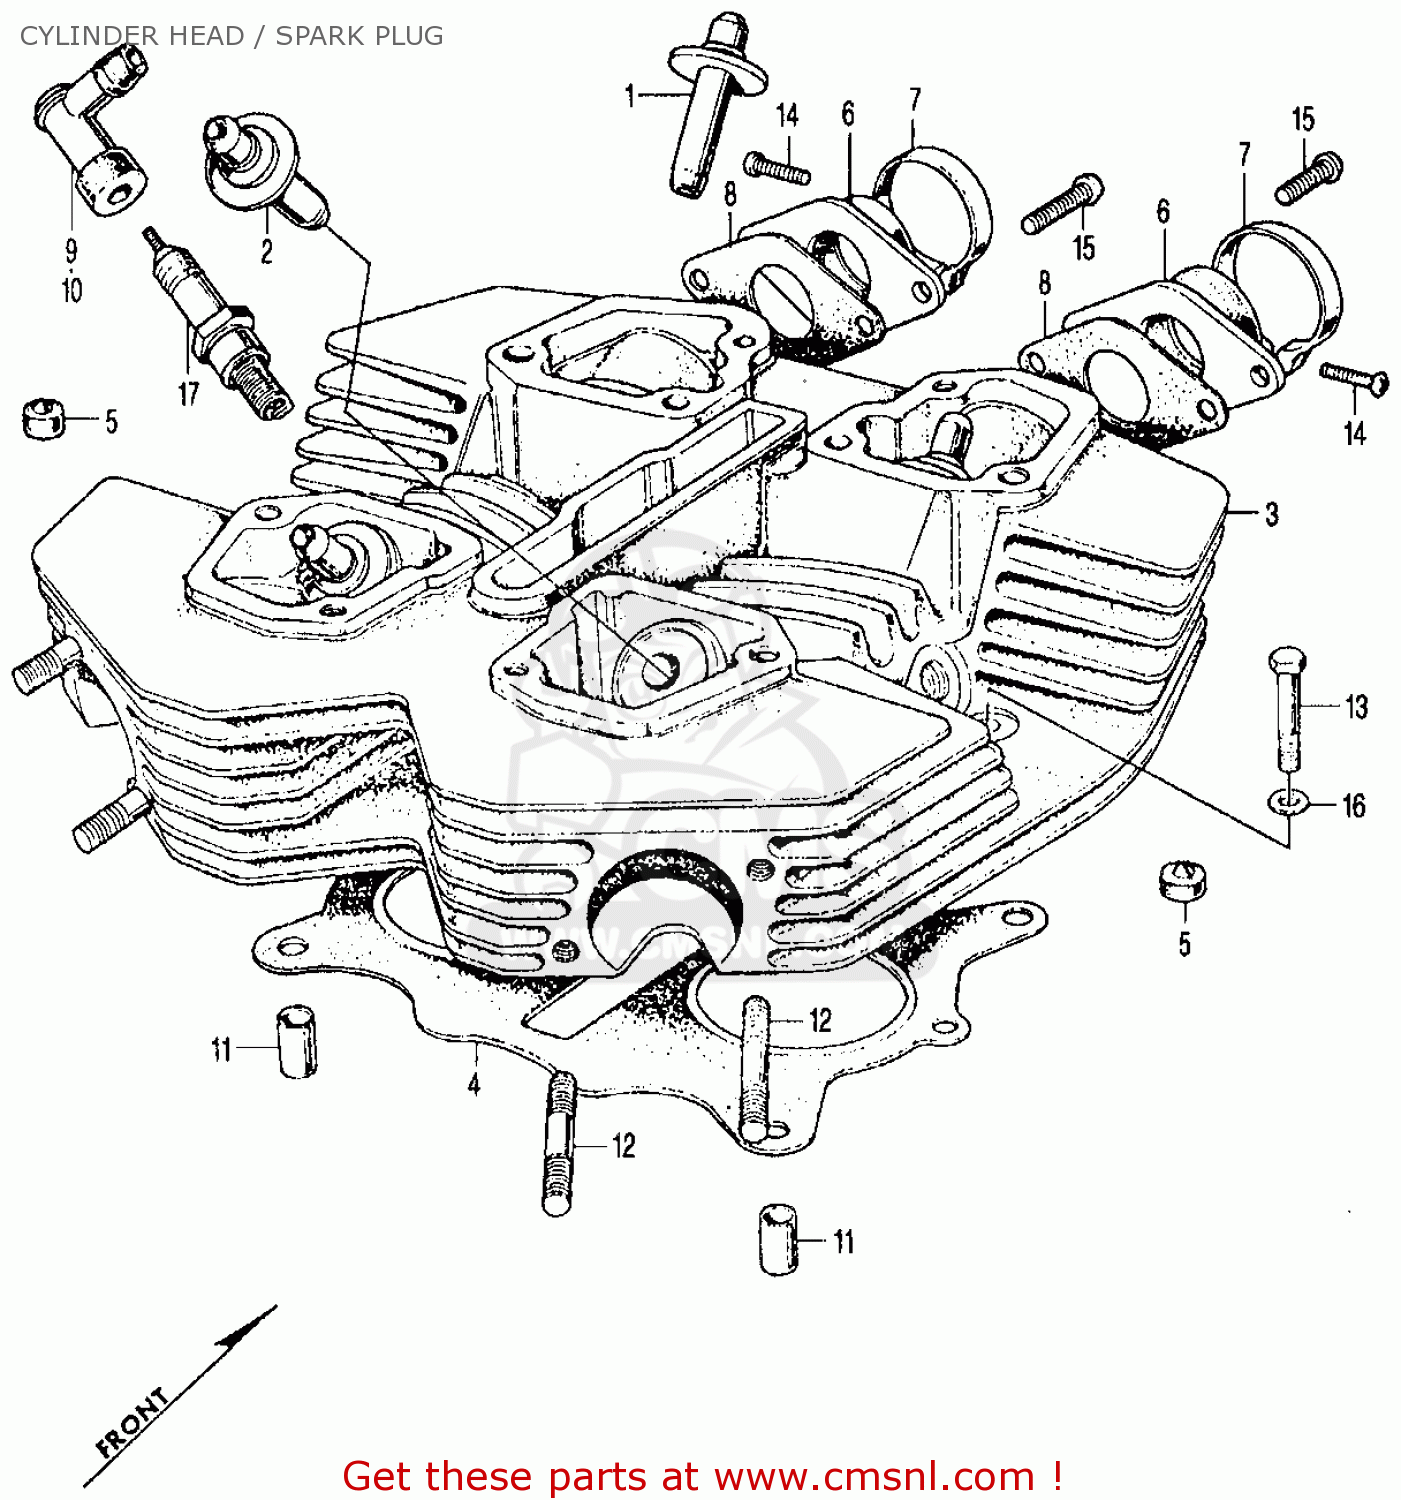 1971 Honda cb350 spark plug #3